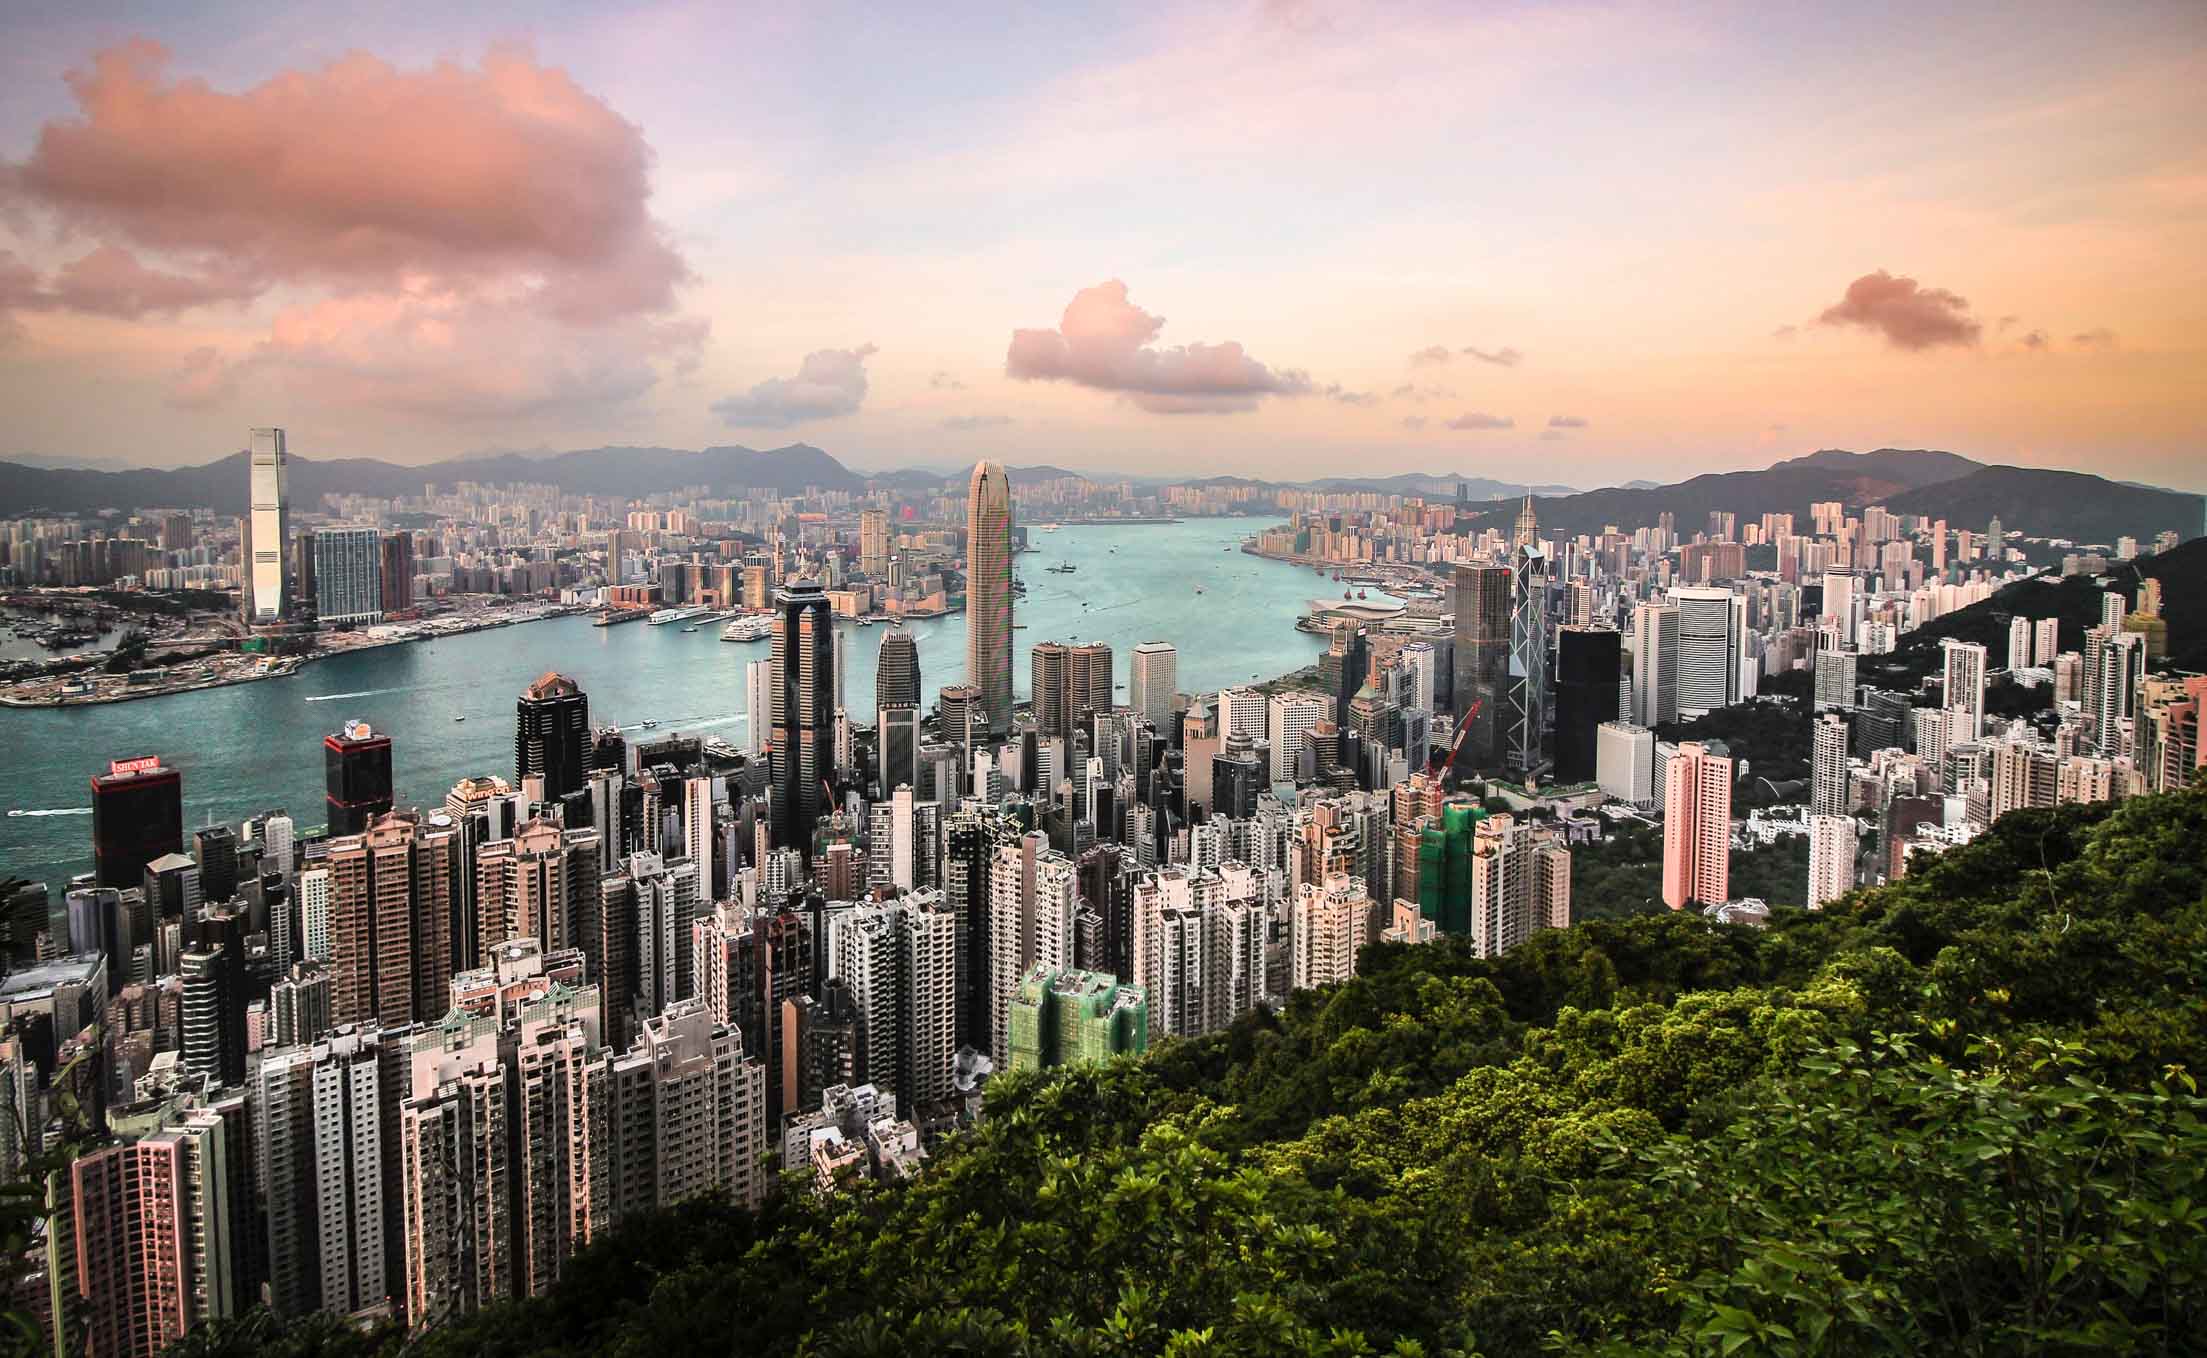 Top things to do in Hong Kong #1 - Victoria Peak